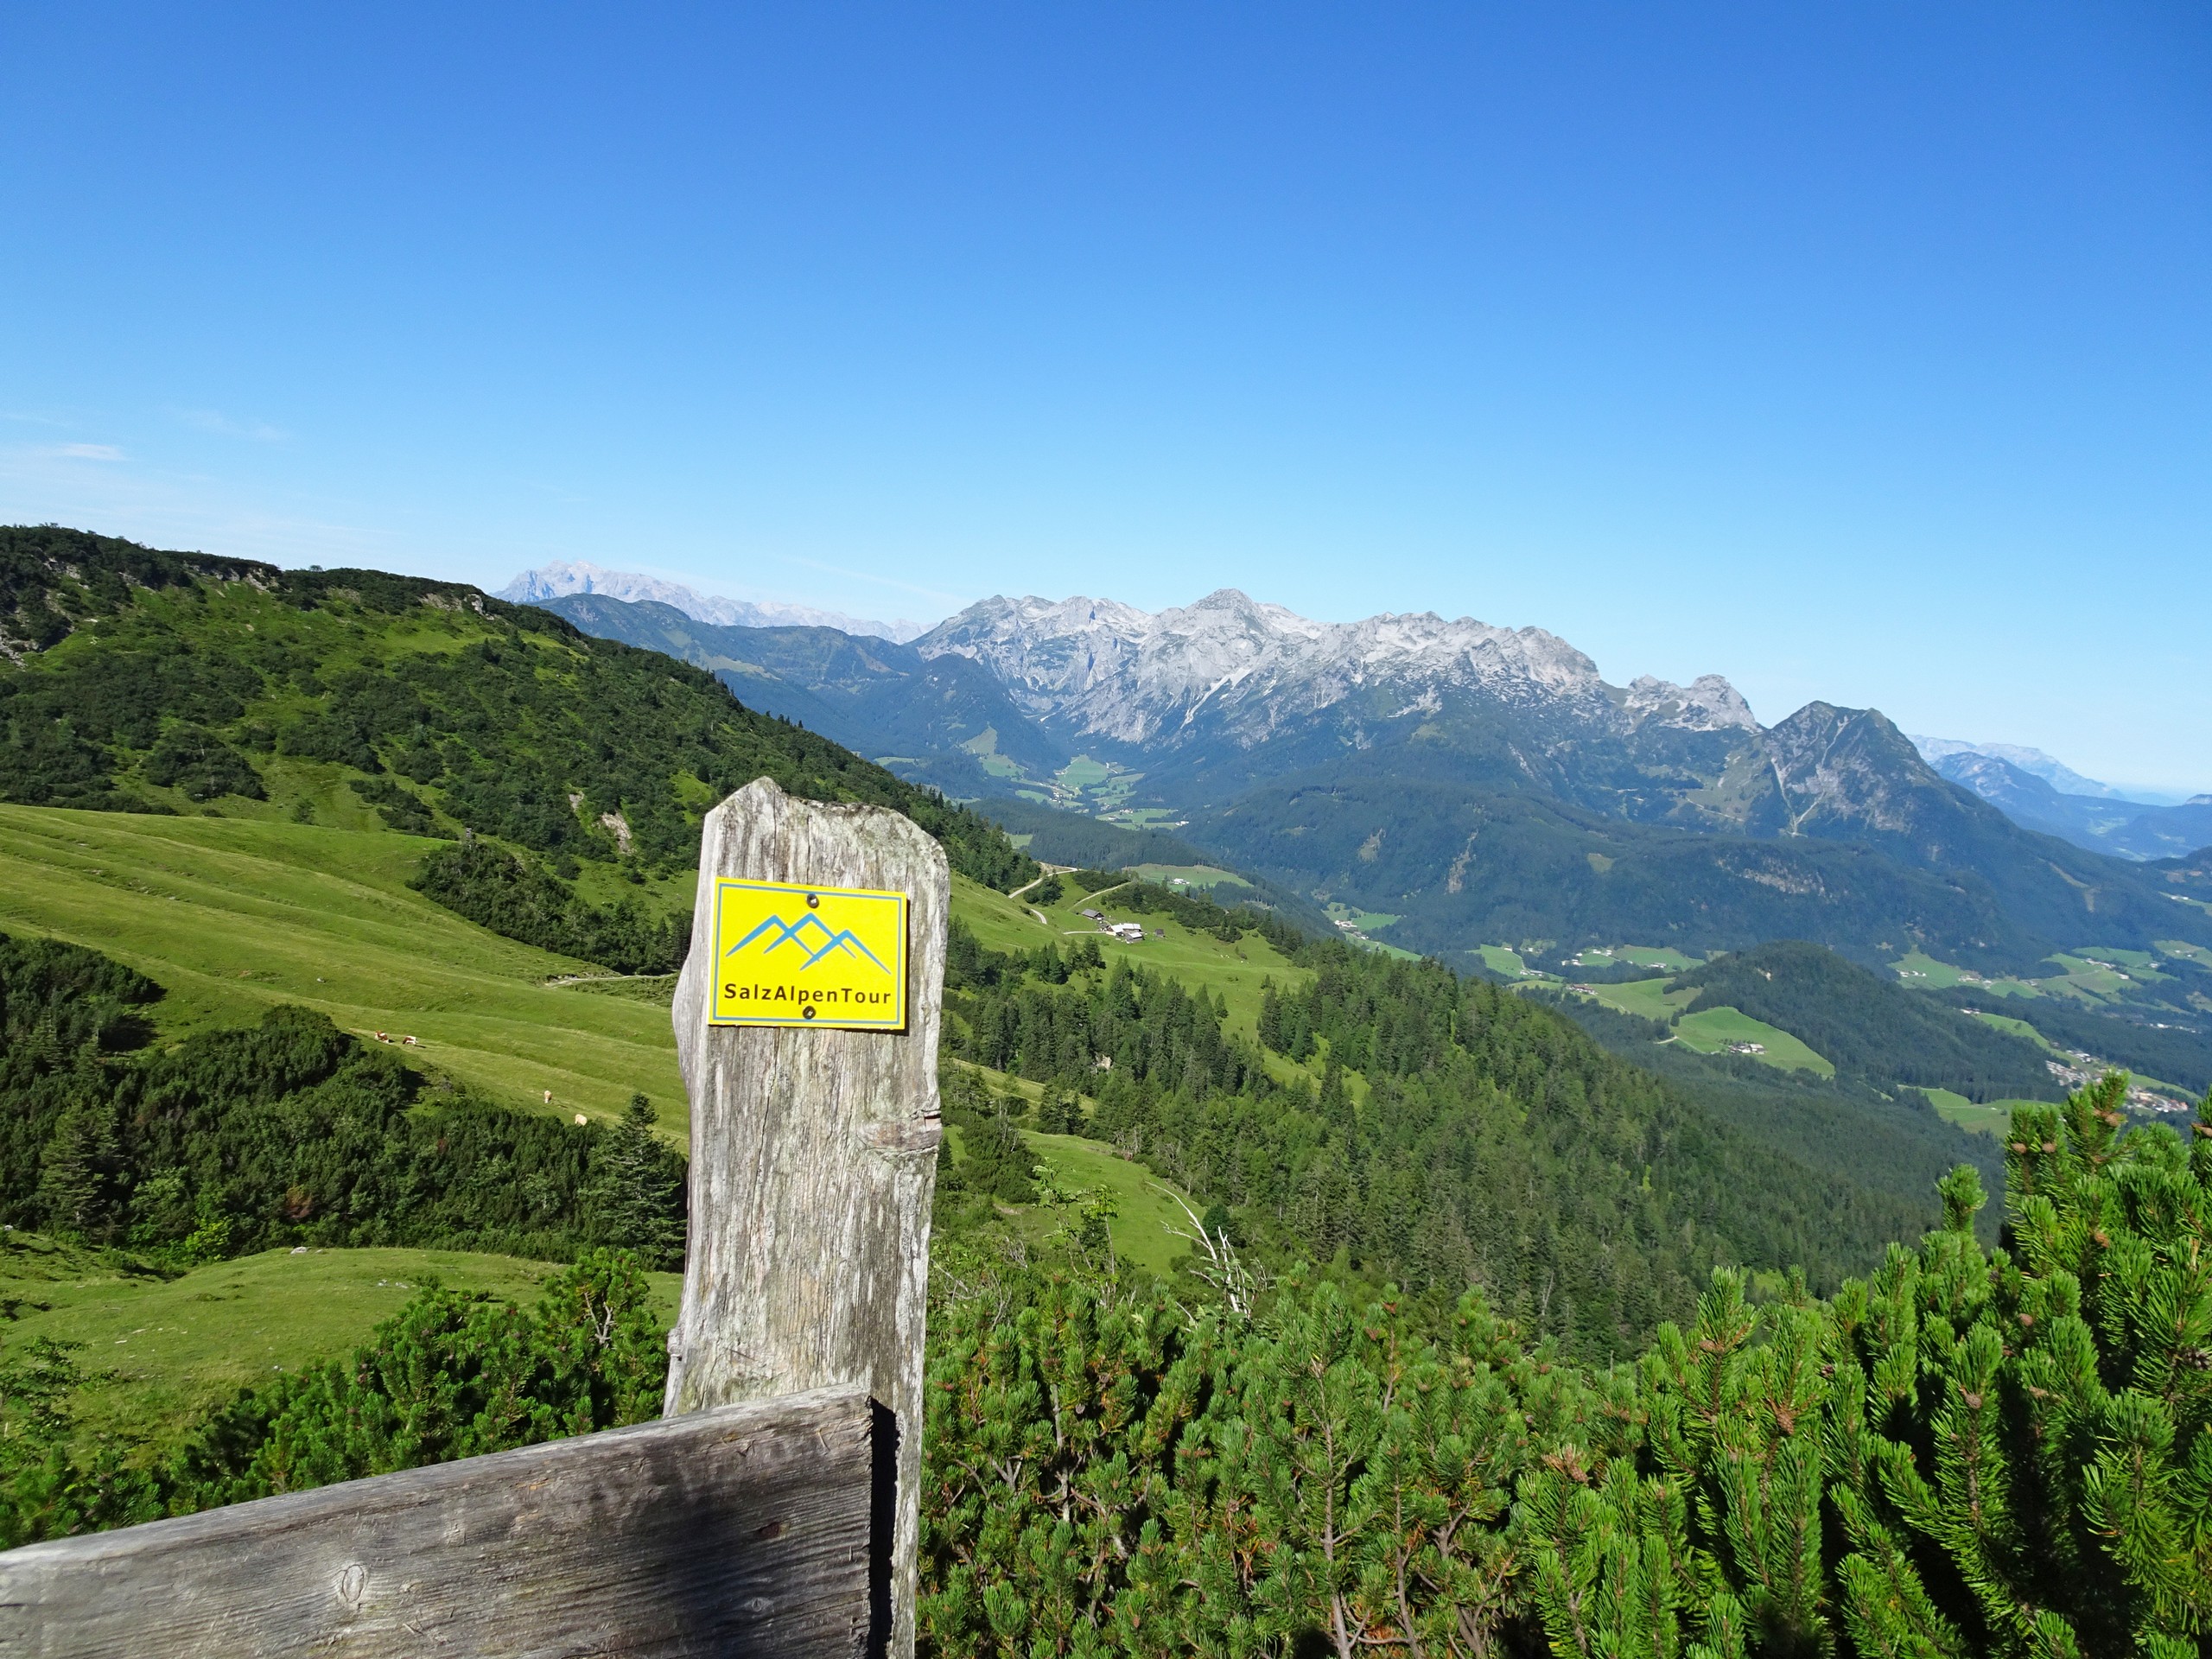 Salzalpensteig Hiking trail in Germany-19